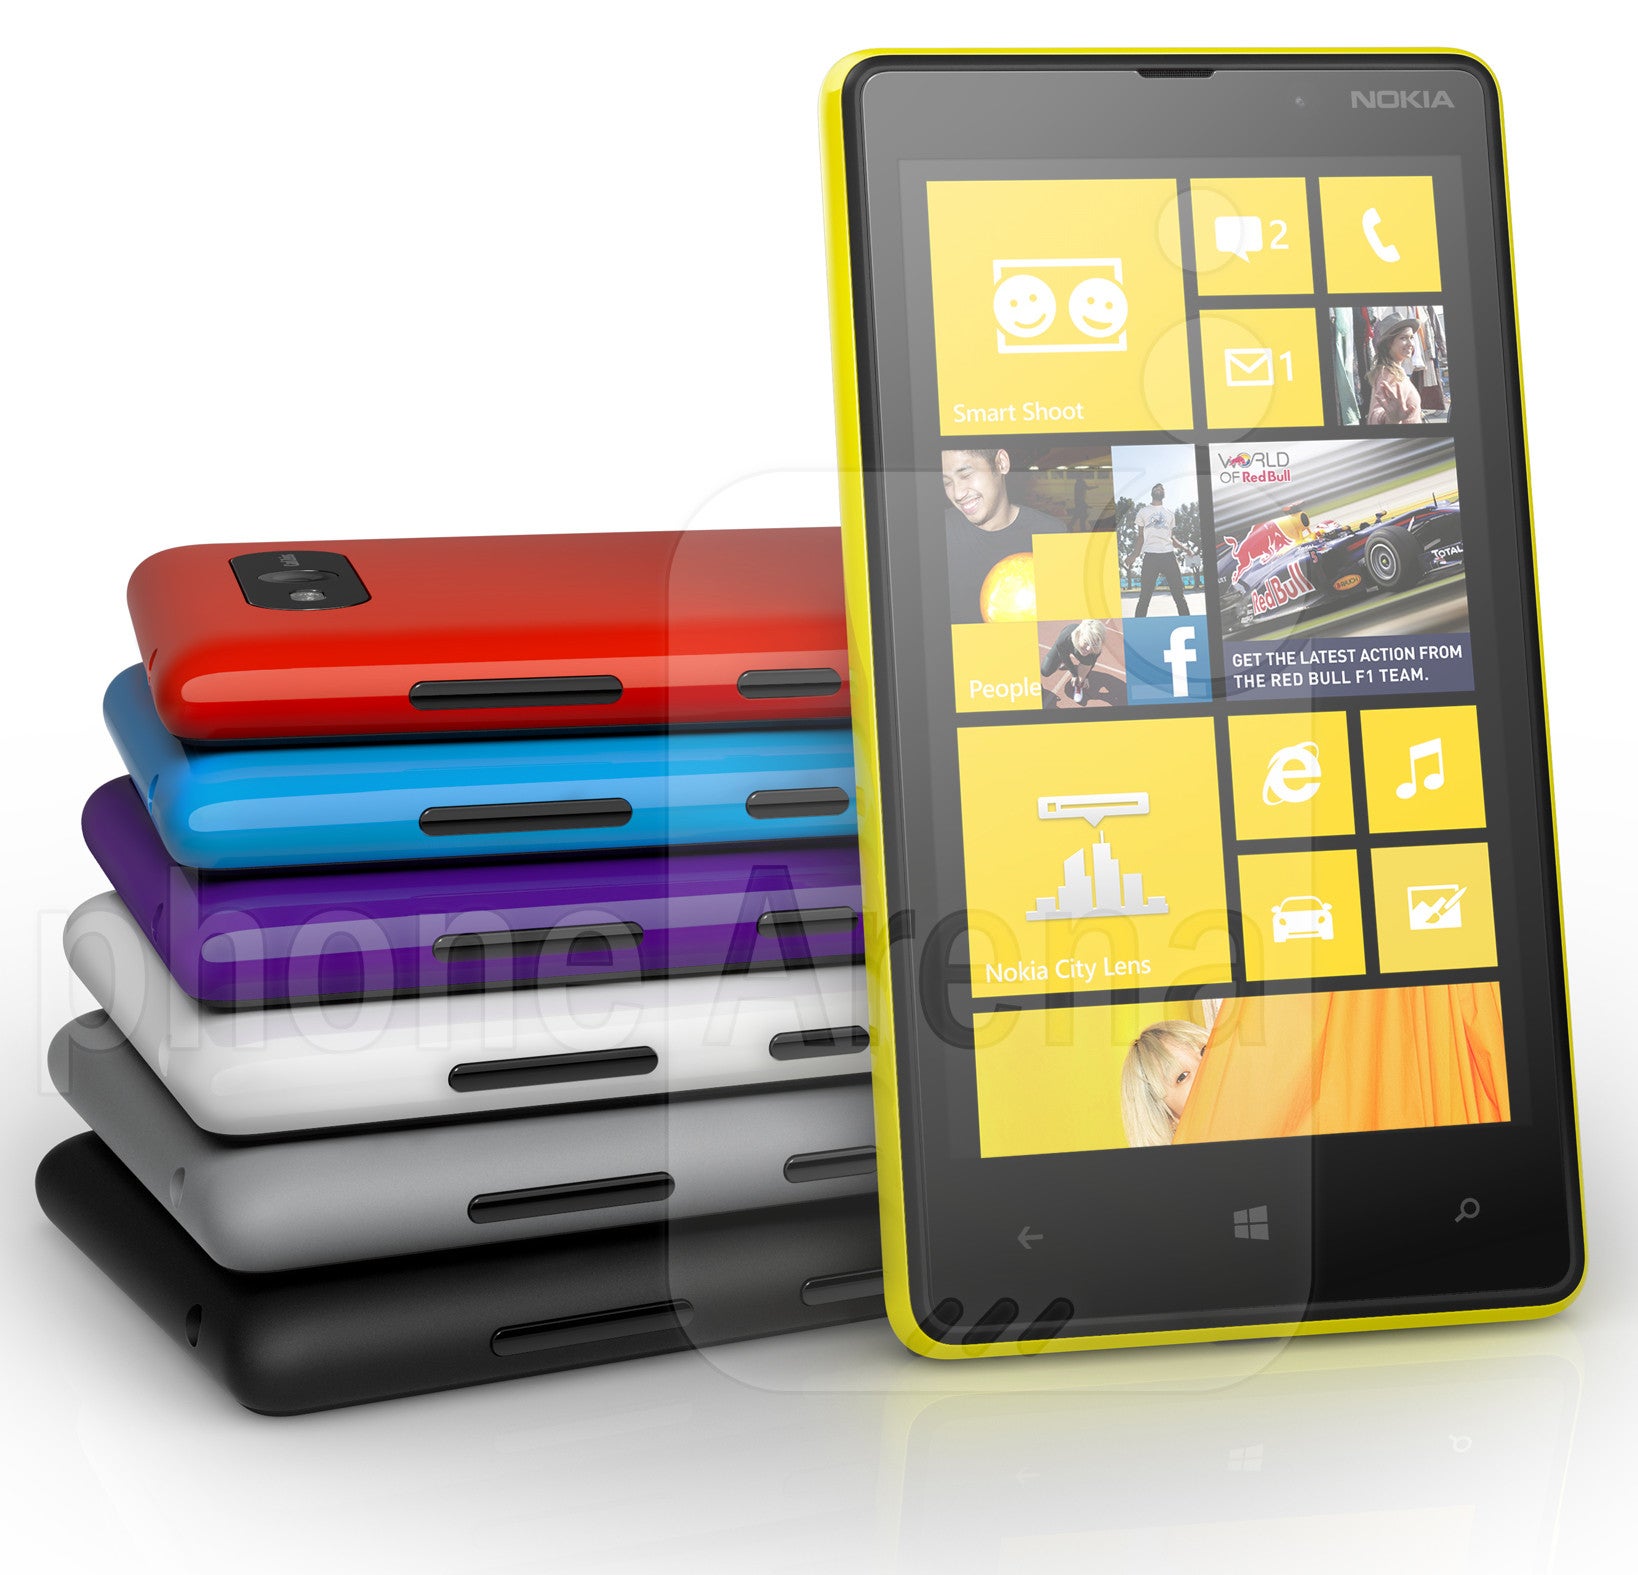 The Windows Phone 8 powered Nokia Lumia 820 - Microsoft posting job listings for the next version of Windows Phone